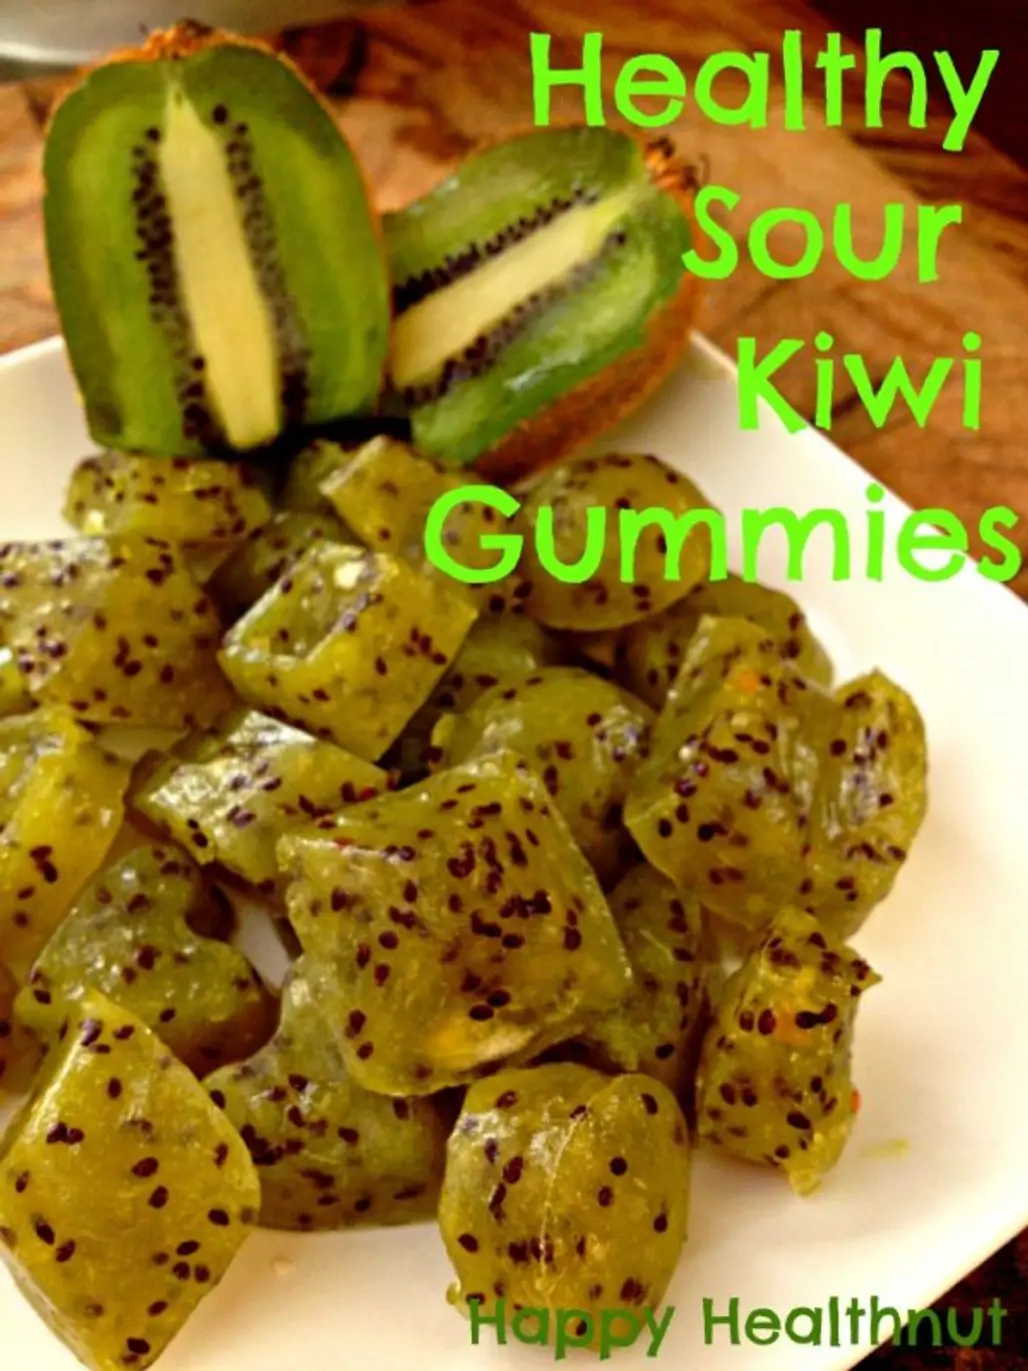 25 Best Kiwi Recipes - Insanely Good